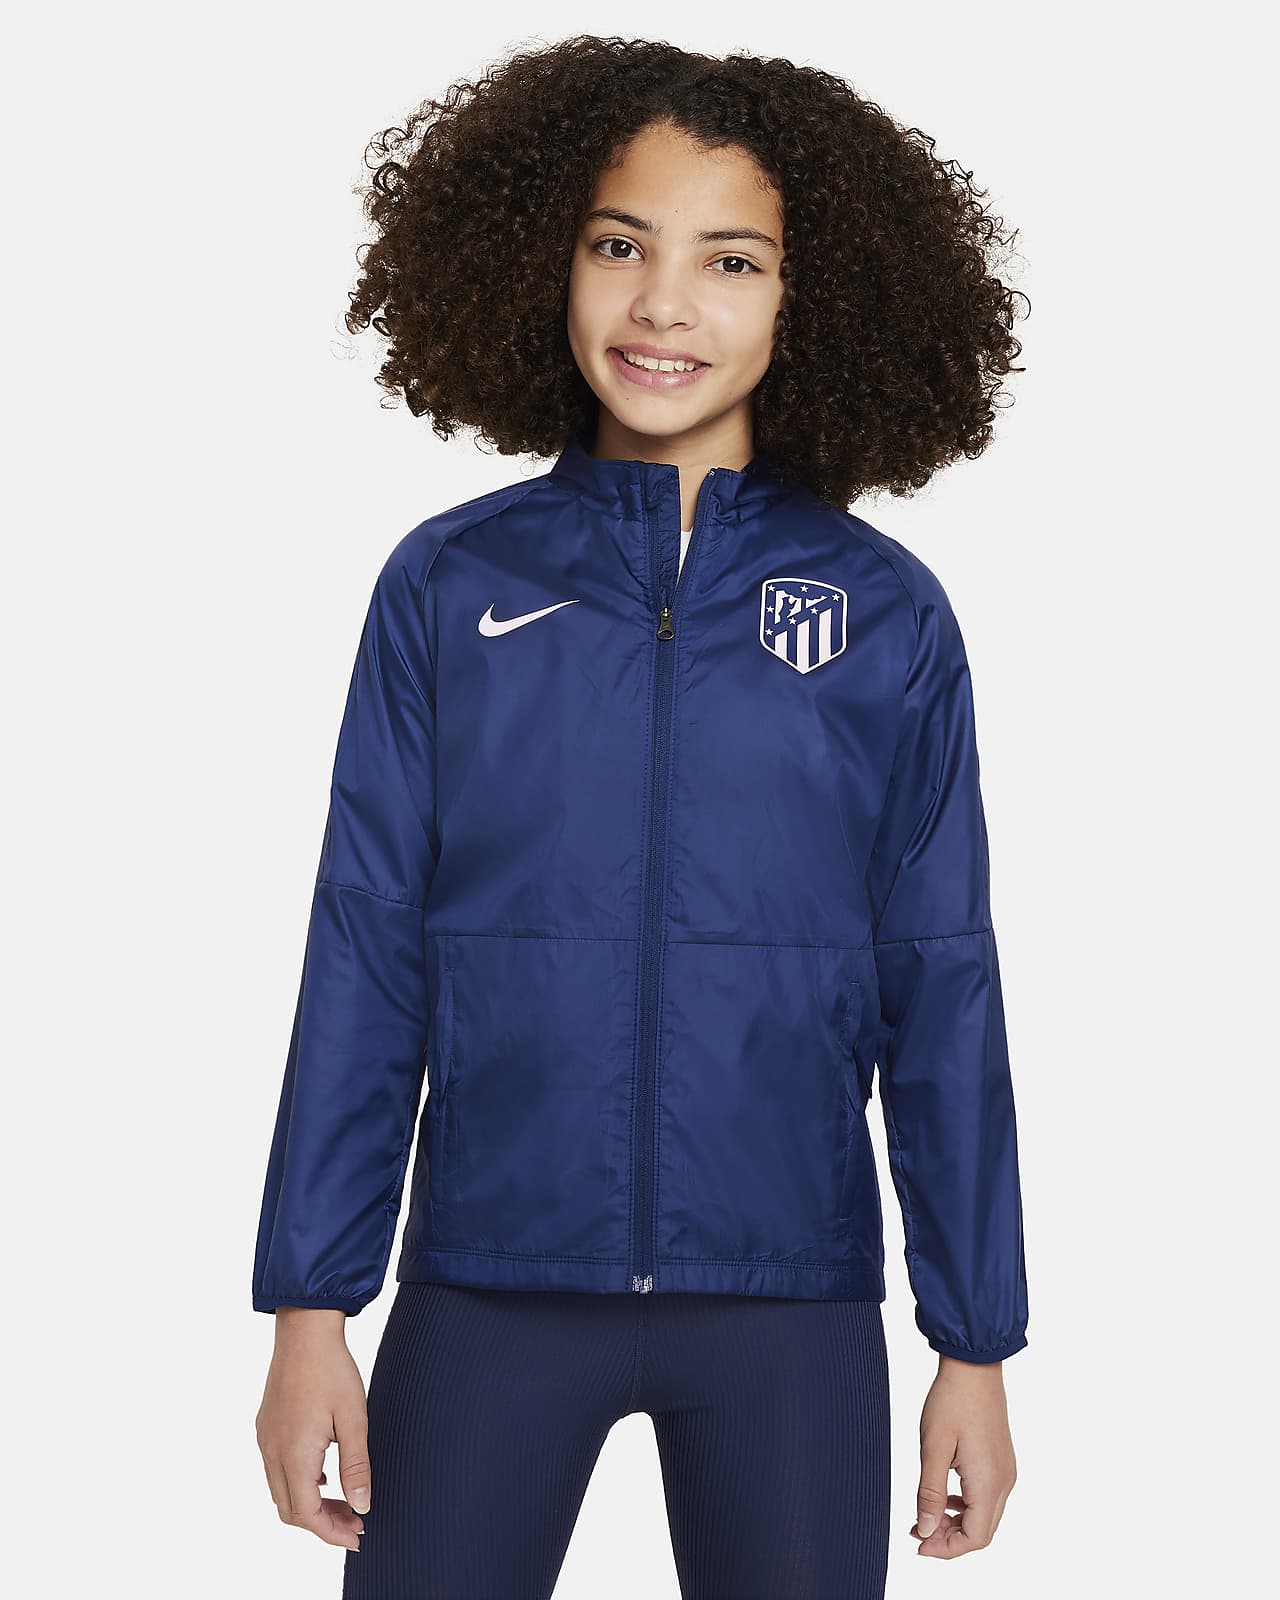 Atlético Madrid Repel Academy AWF Older Kids' Nike Football Jacket